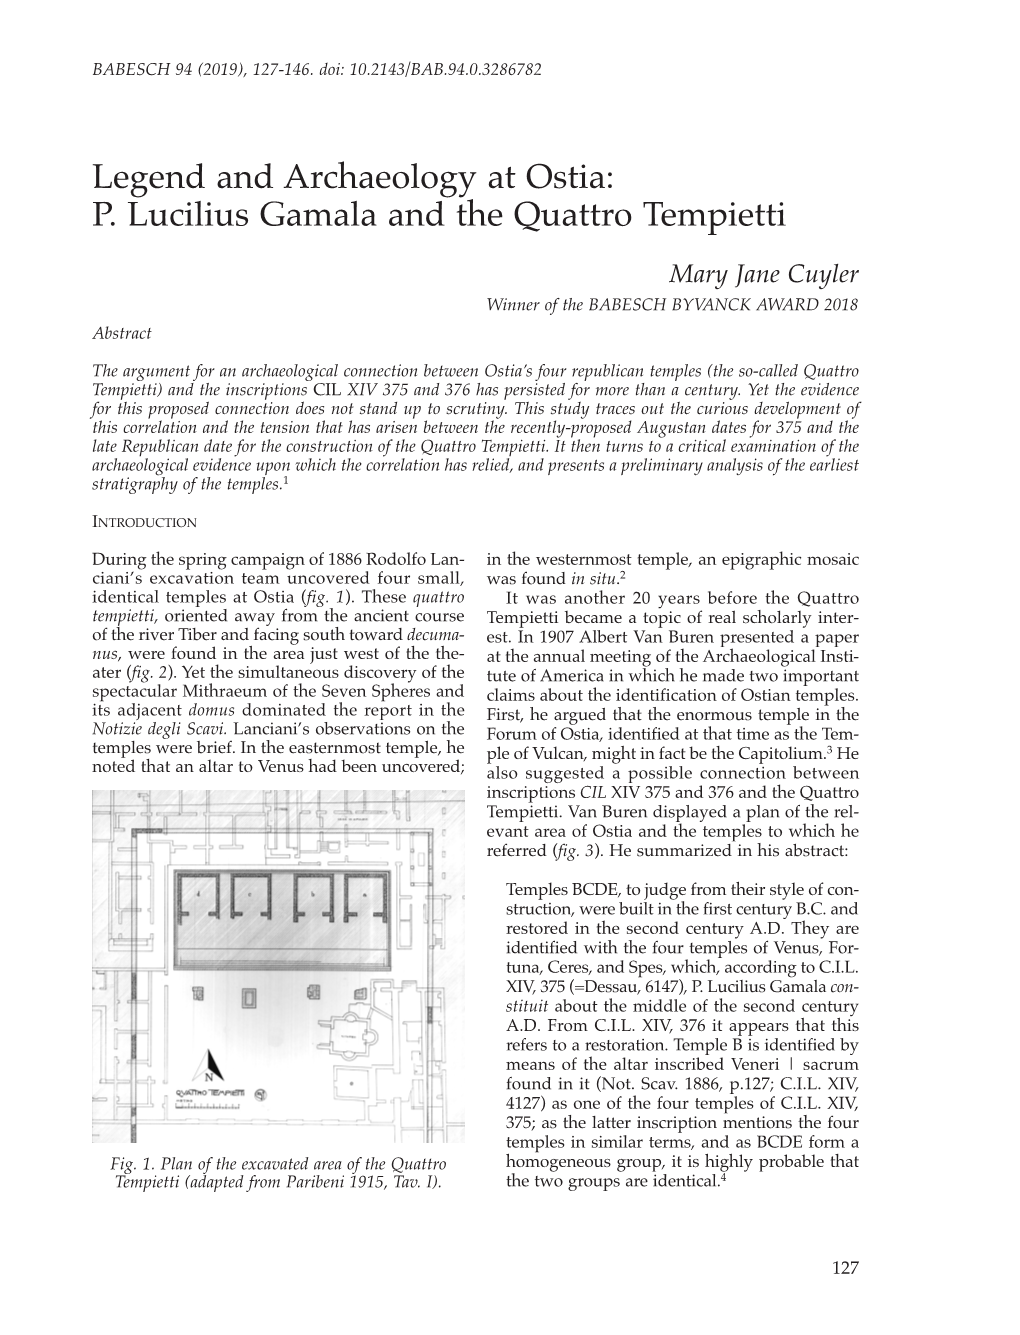 Legend and Archaeology at Ostia: P. Lucilius Gamala and the Quattro Tempietti